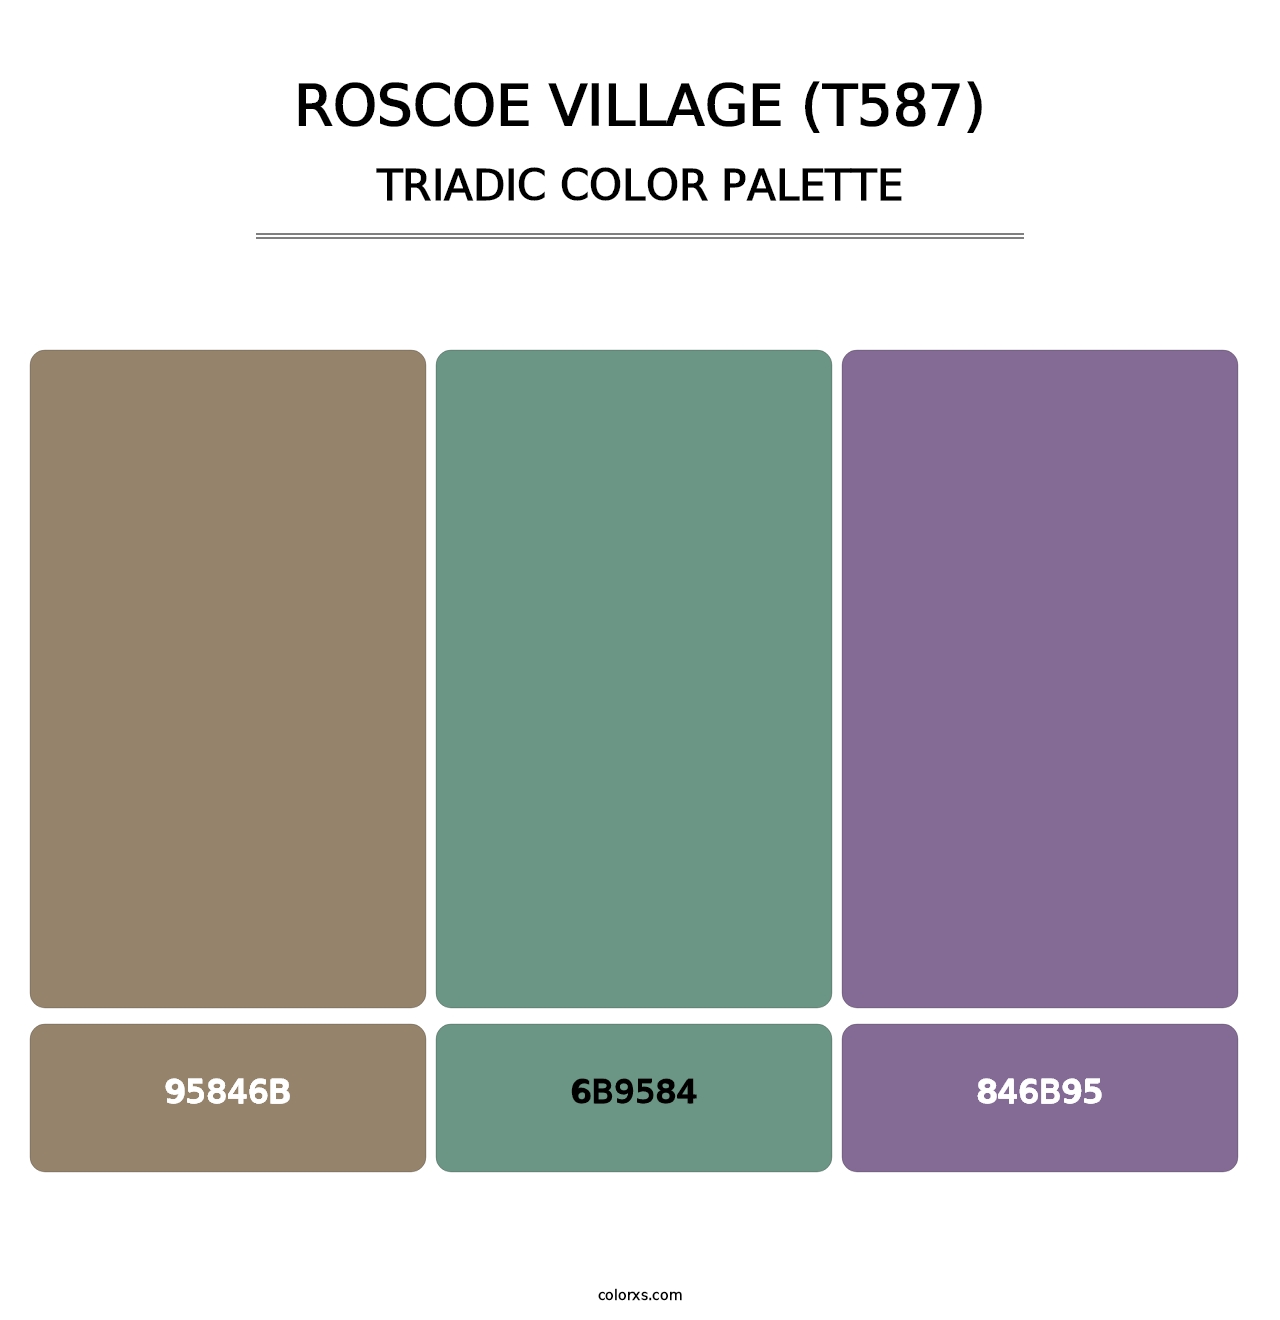 Roscoe Village (T587) - Triadic Color Palette